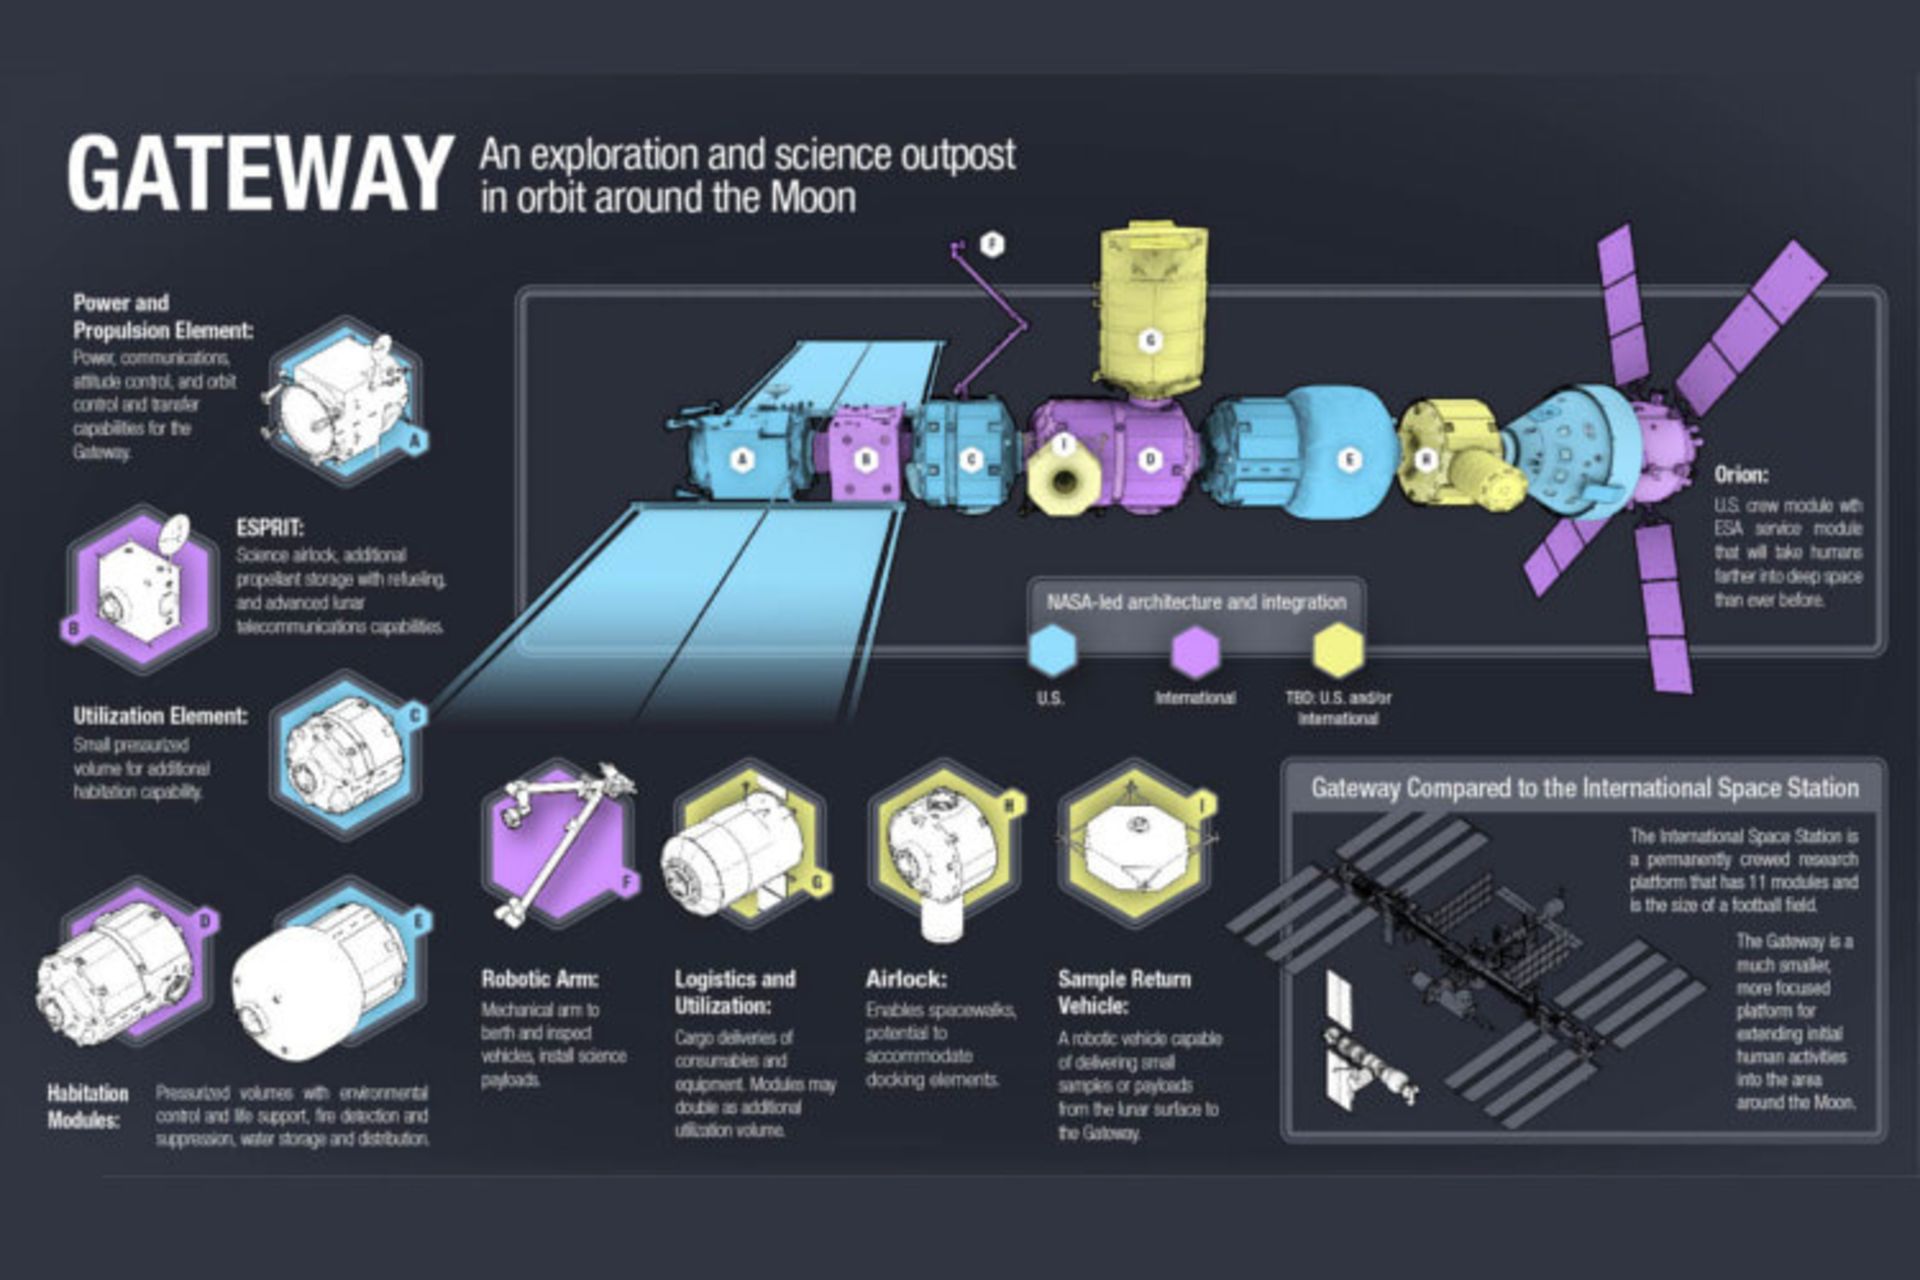  Lunar Orbital Platform-Gateway